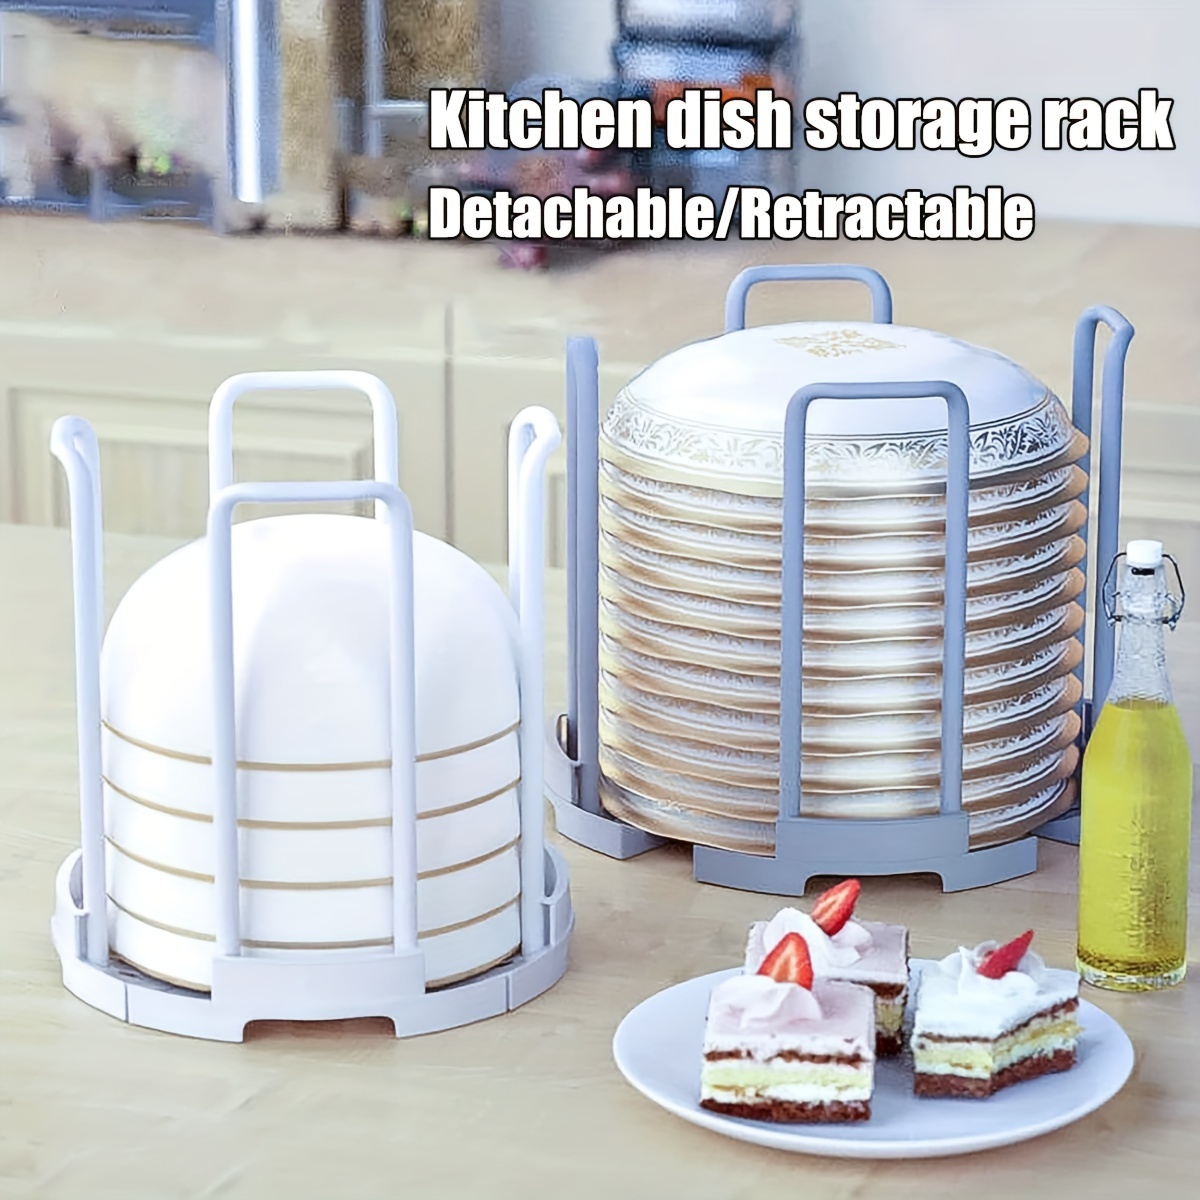 

1pc Adjustable Plastic Kitchen Dish Rack - Expandable Storage Organizer For Drying Plates, Bowls, Tableware - Space Saving, Detachable, Moisture-proof Dish Drainer